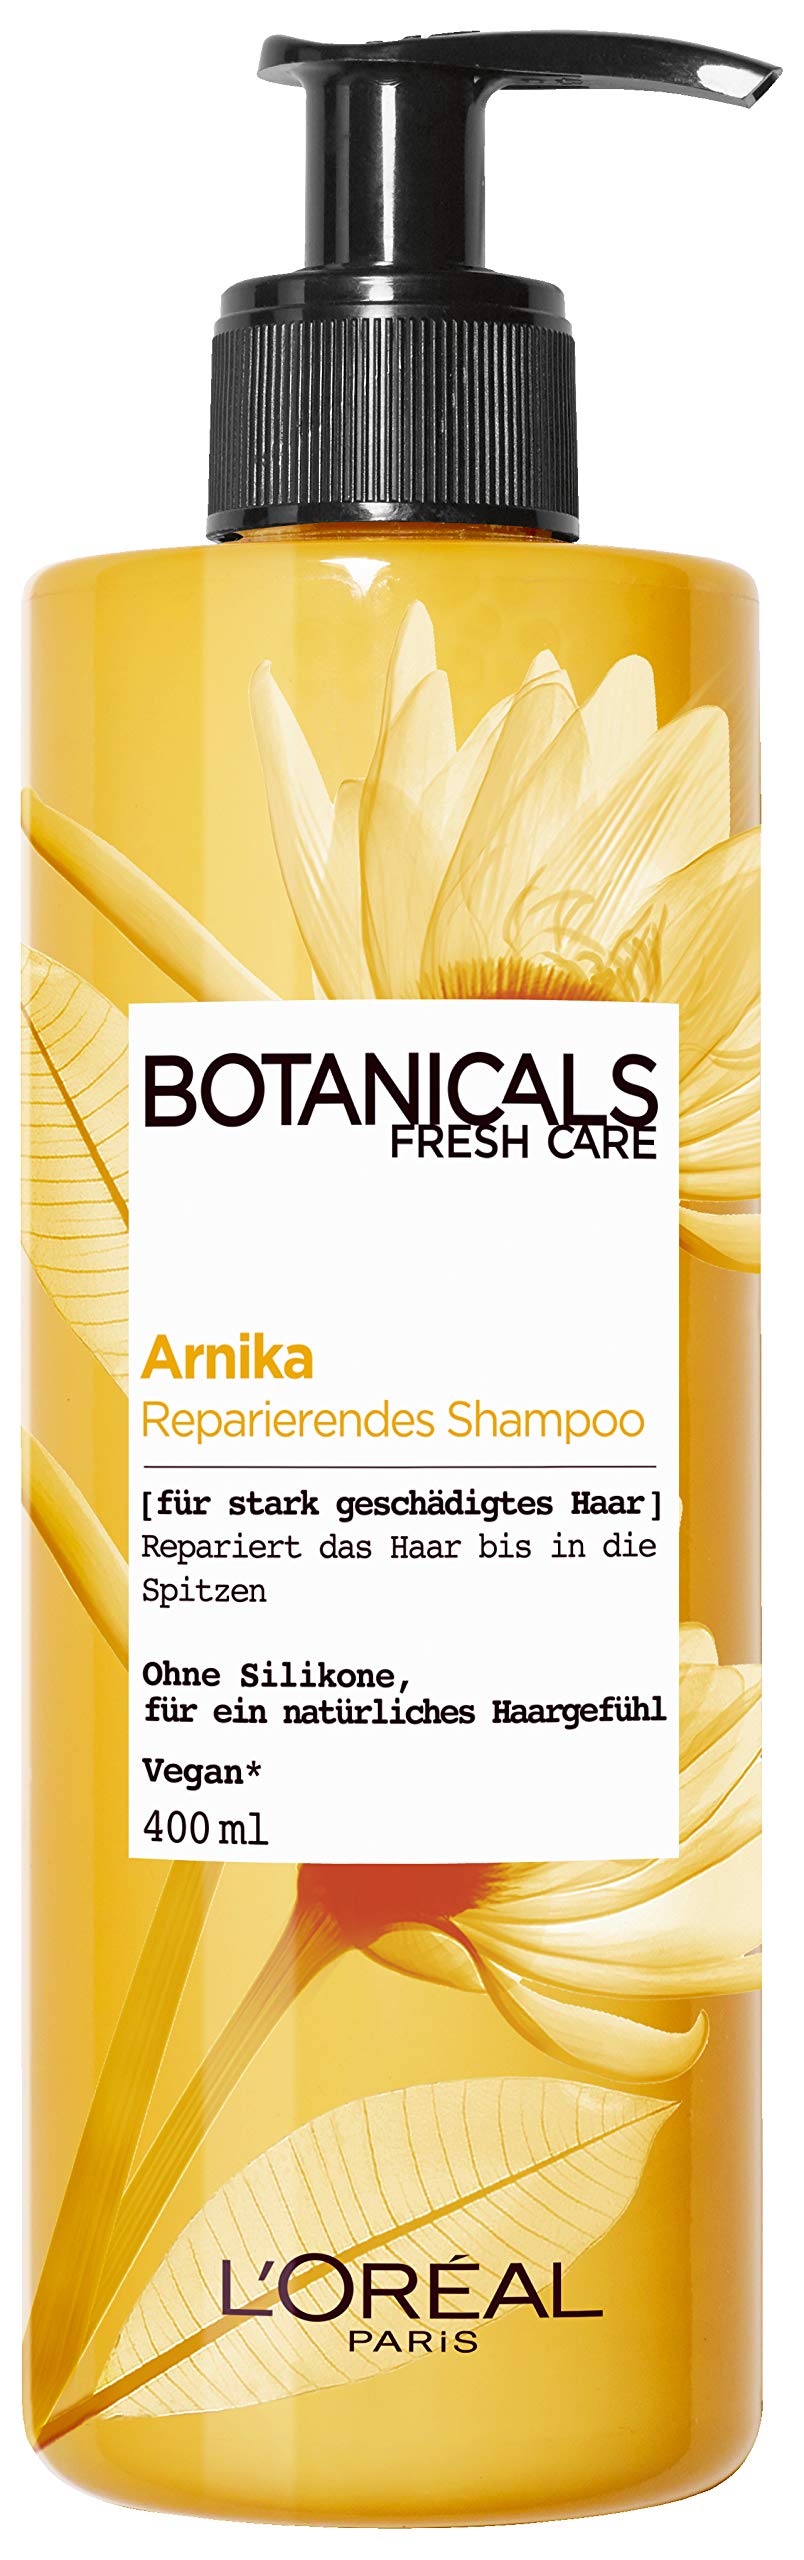 szampon botanical loreal